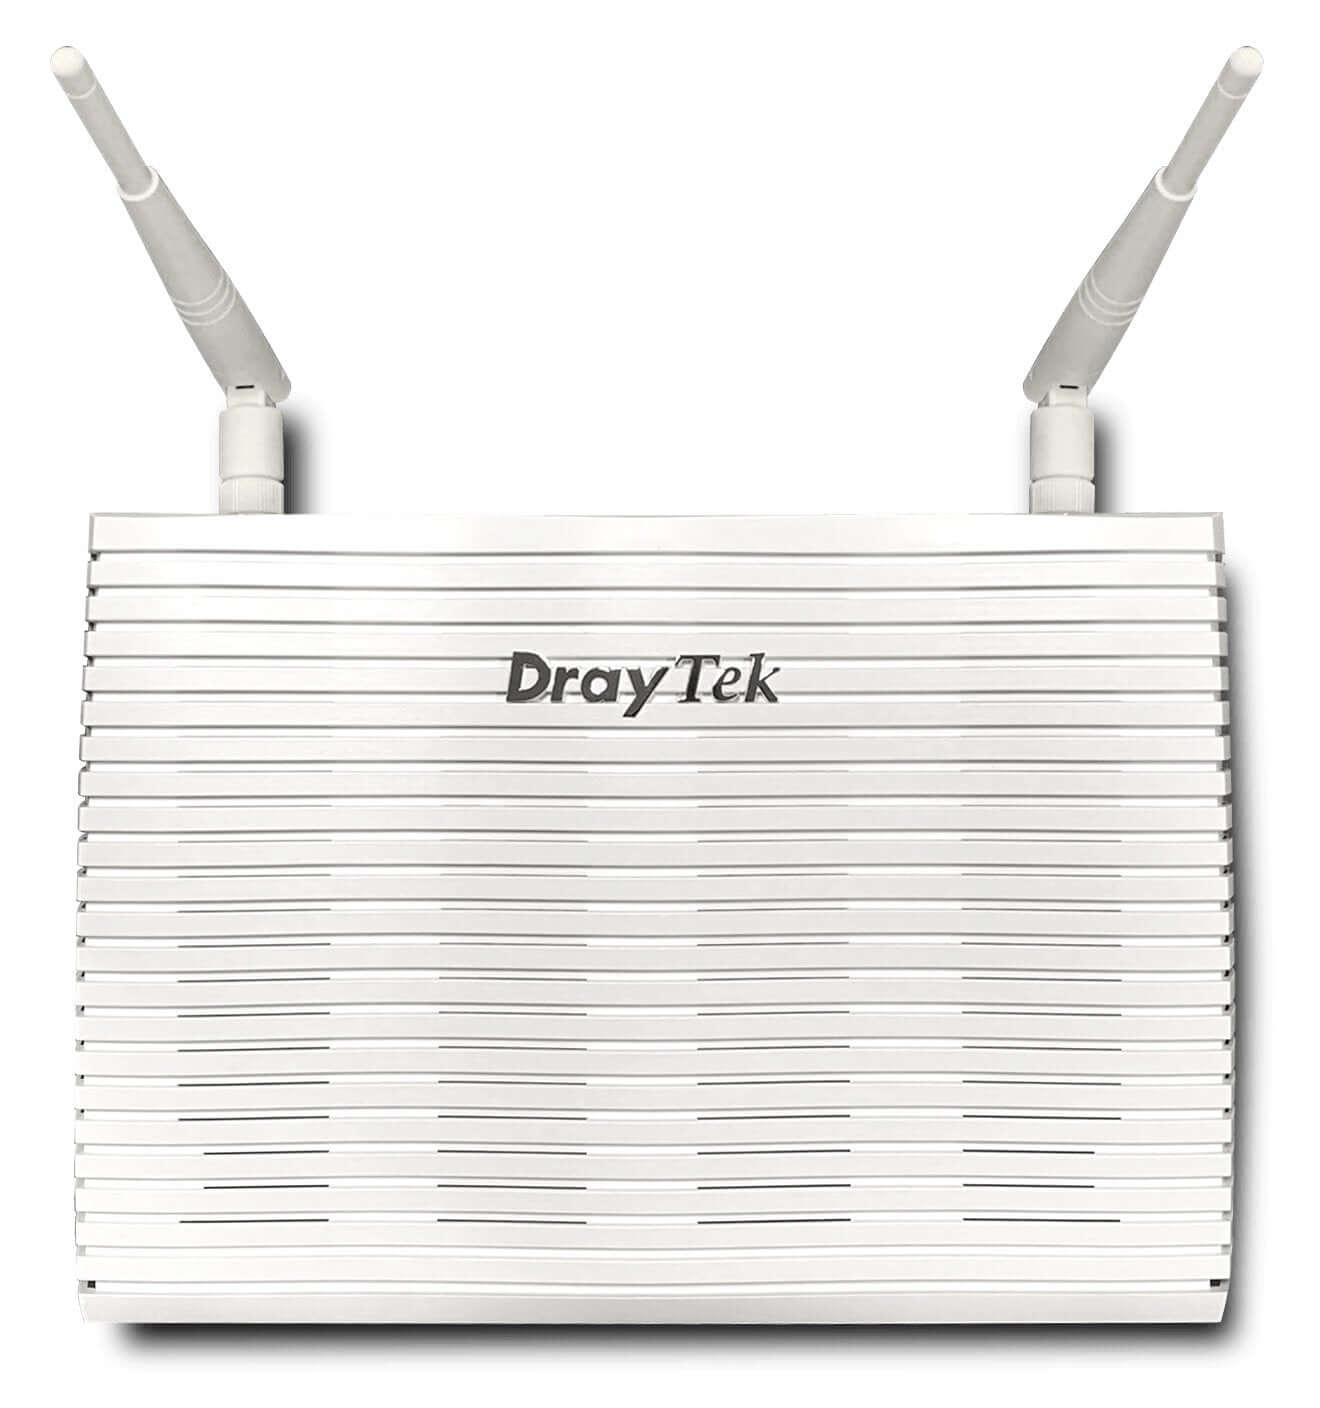 DrayTek 2865AC Multi-WAN Firewall VPN Router Top Down View